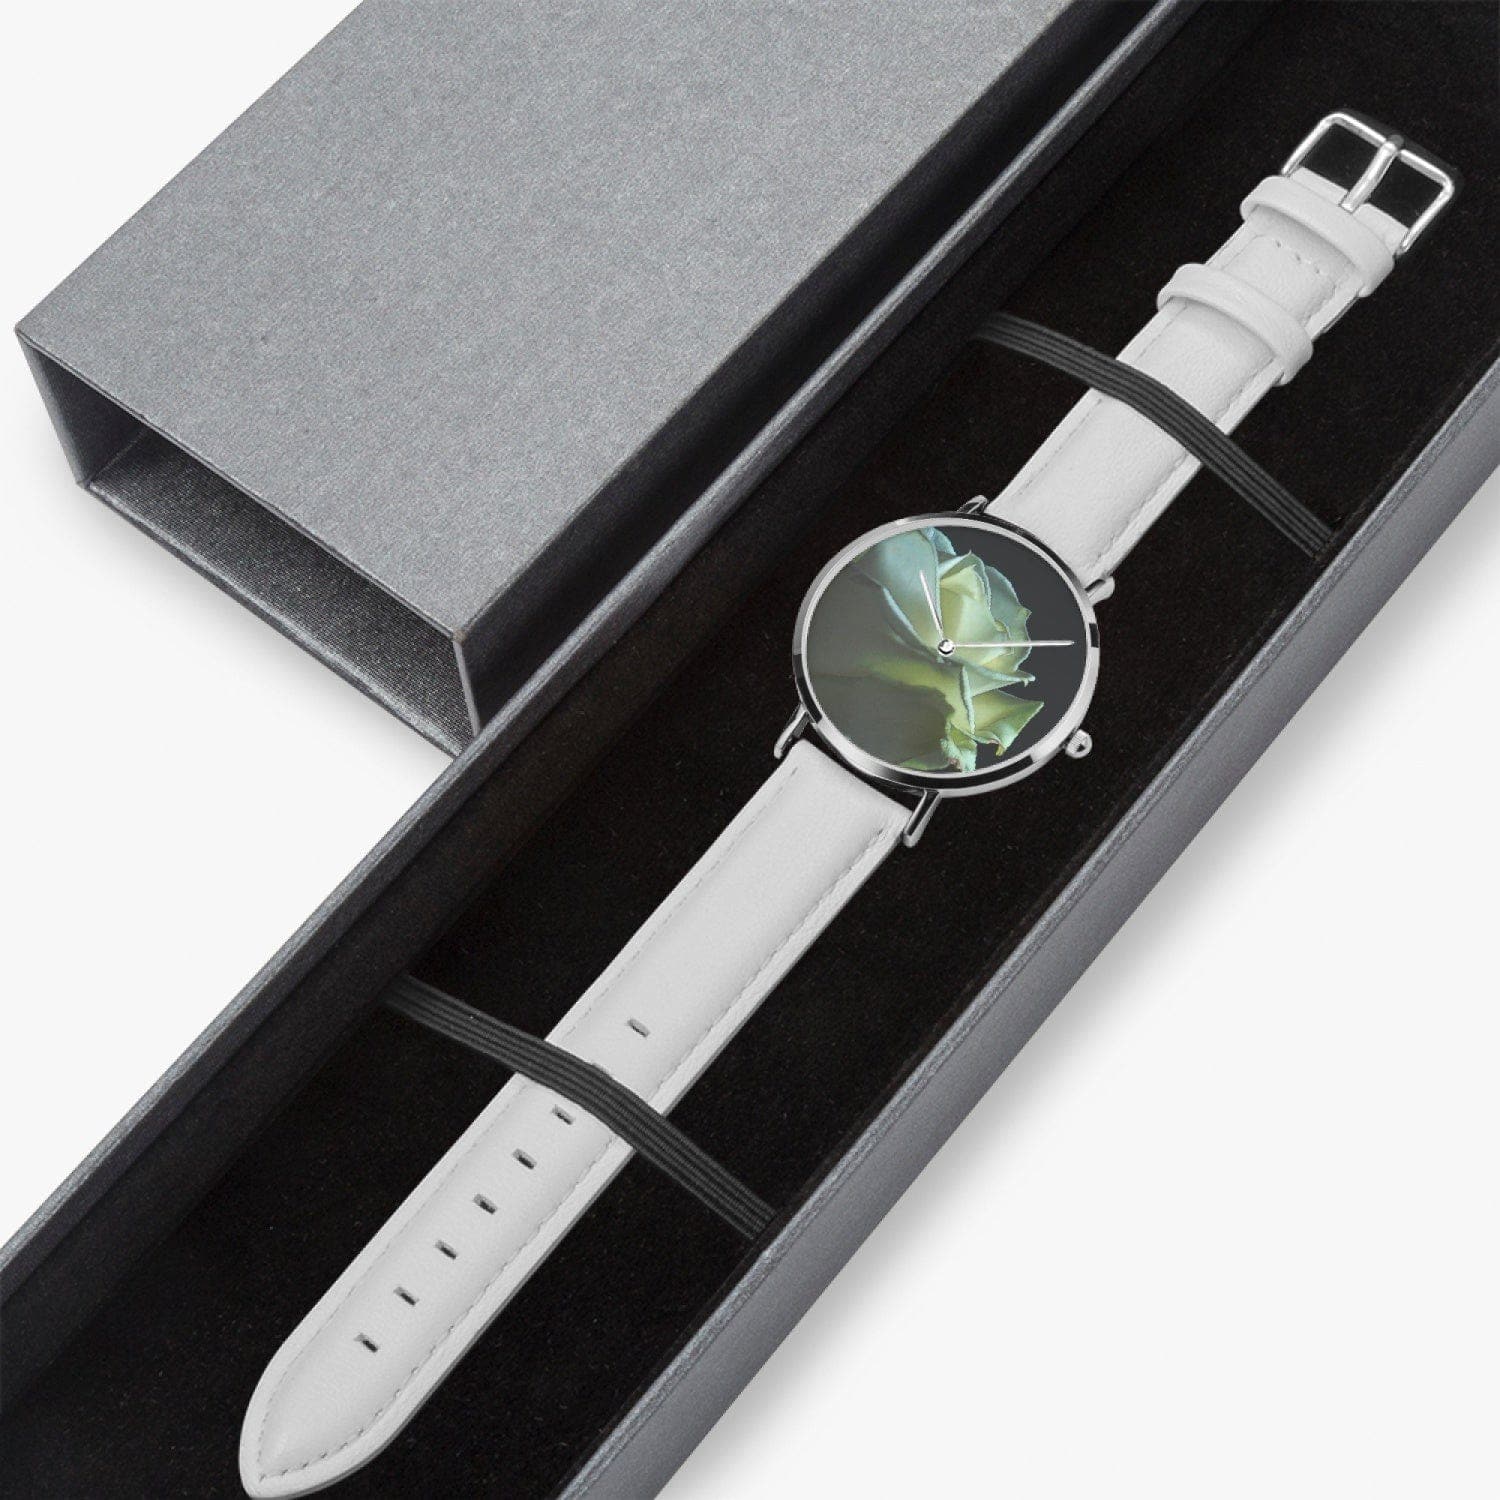 Tender white rose. Hot Selling Ultra-Thin Leather Strap Quartz Watch (Silver), Designer watch by Sensus Studio Design